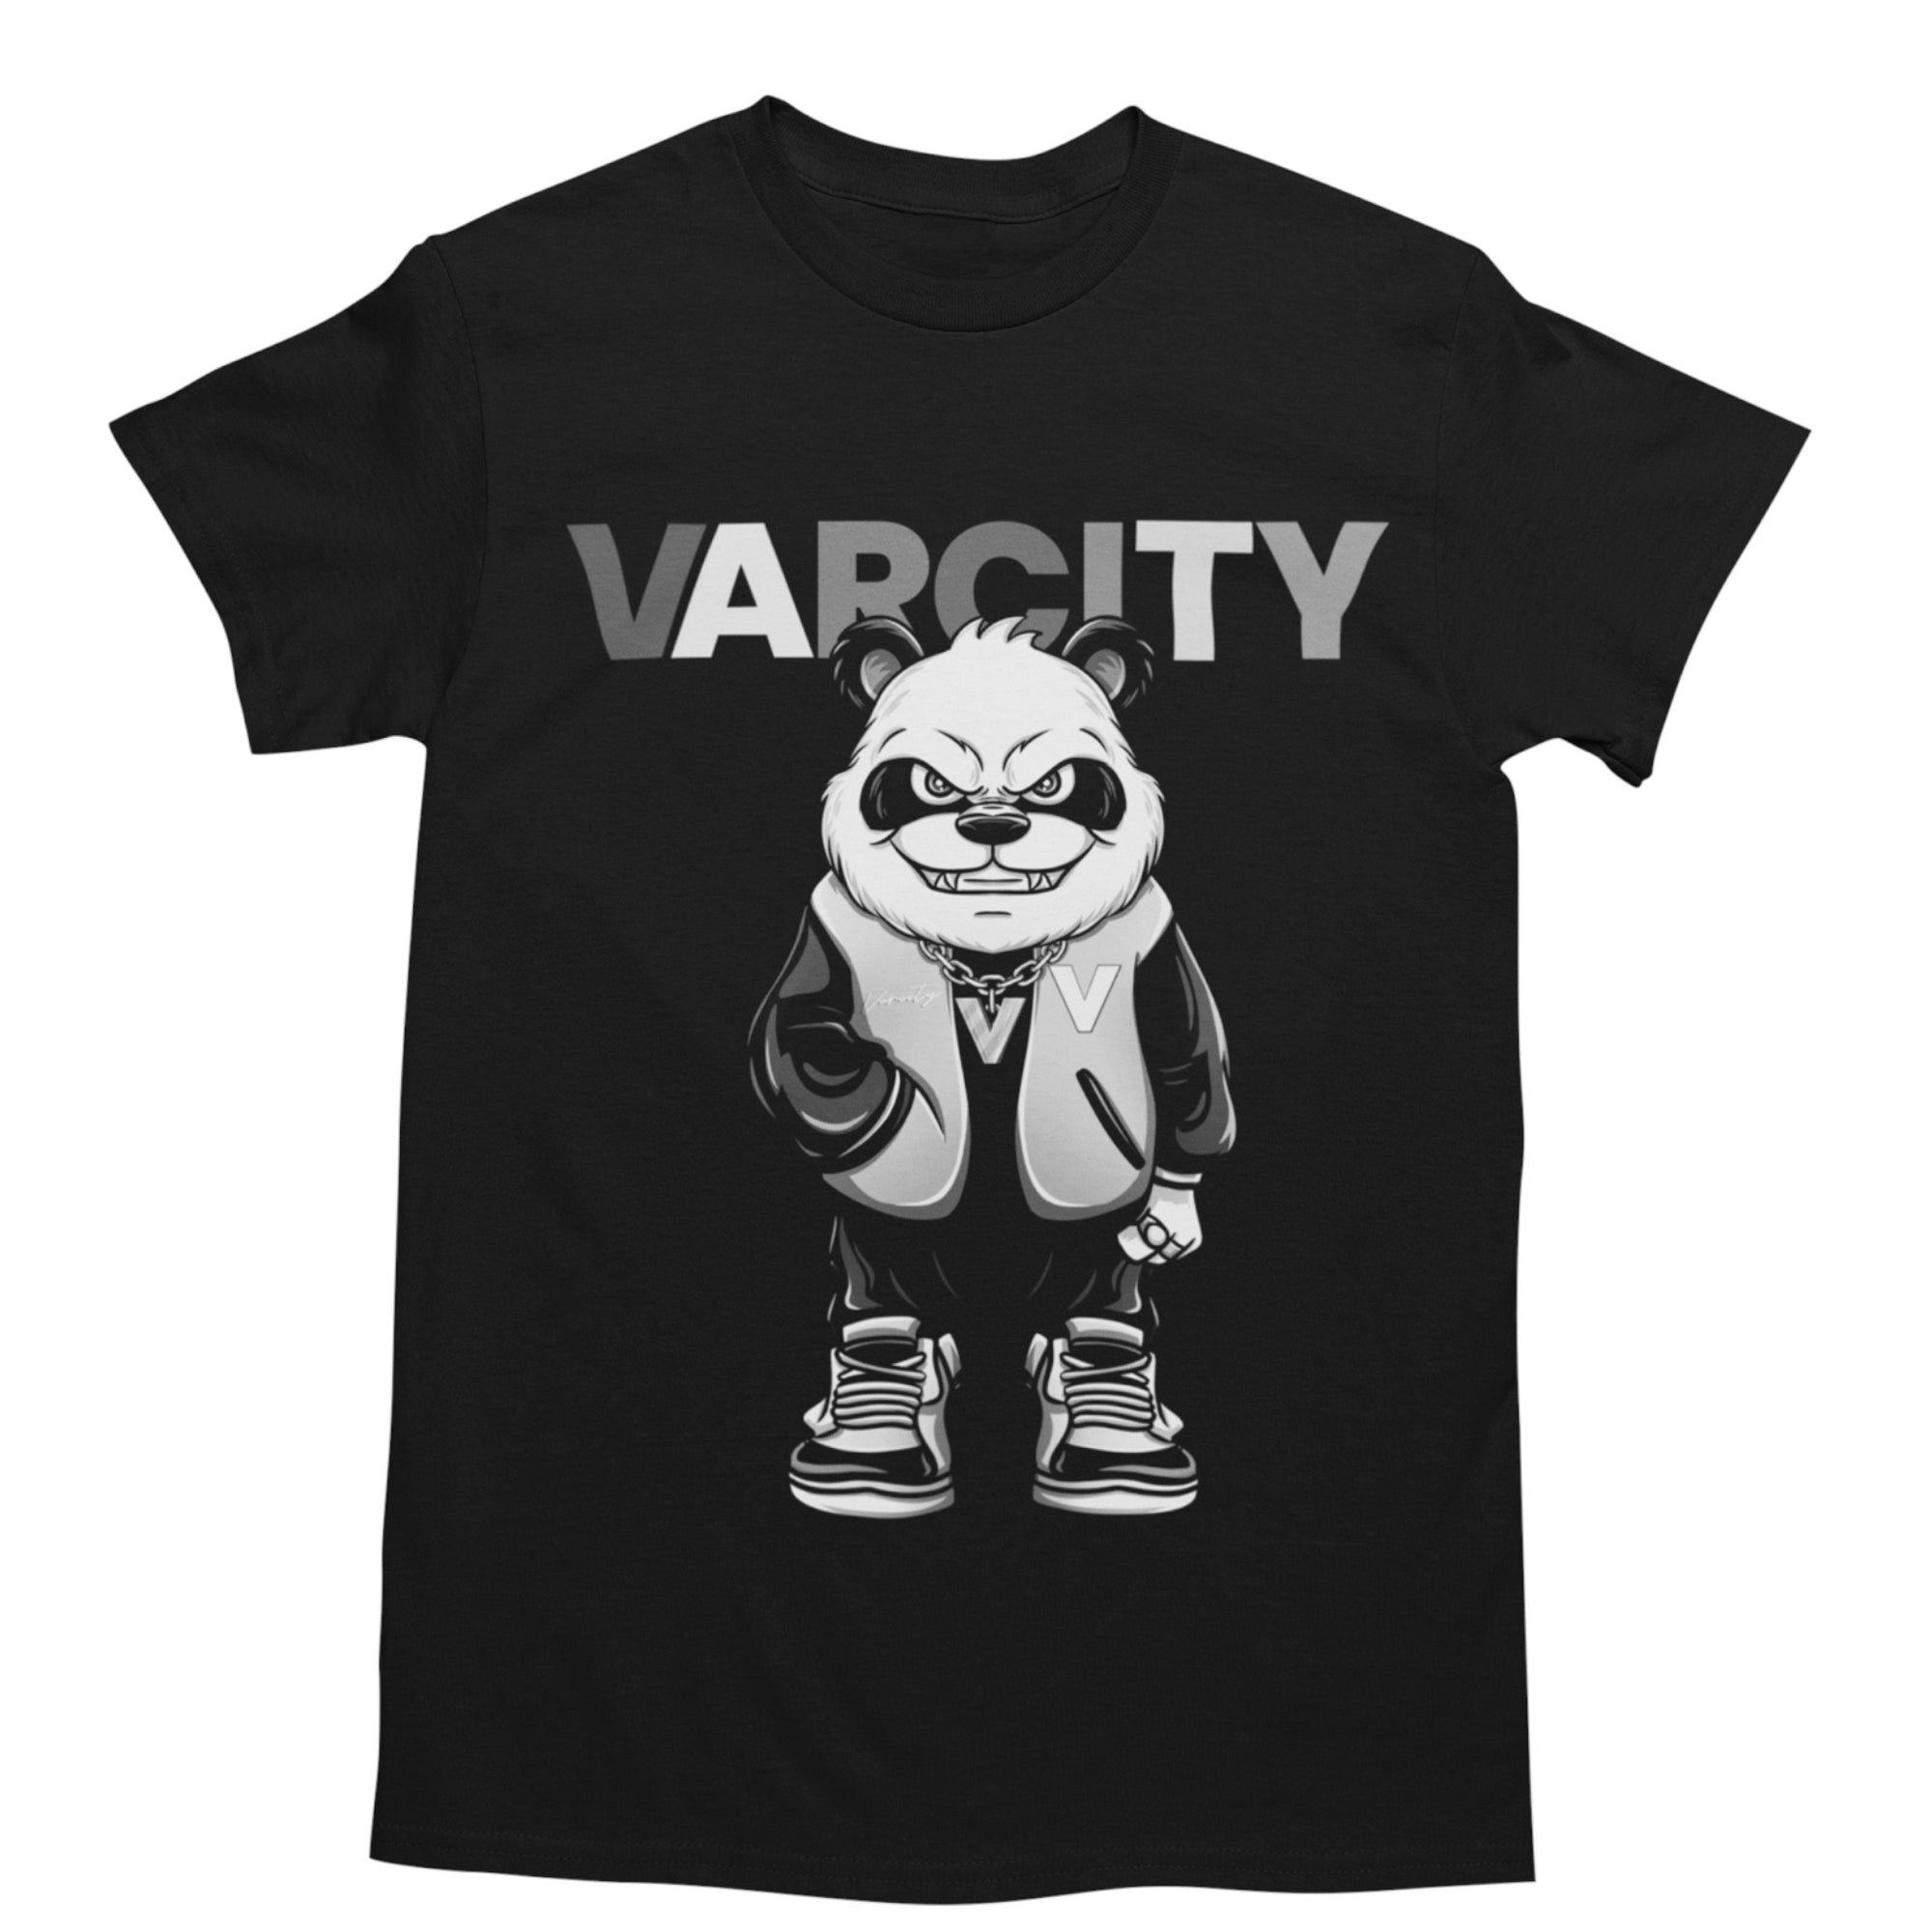 Varcity ® Low Key Panda Statement T Shirt Black